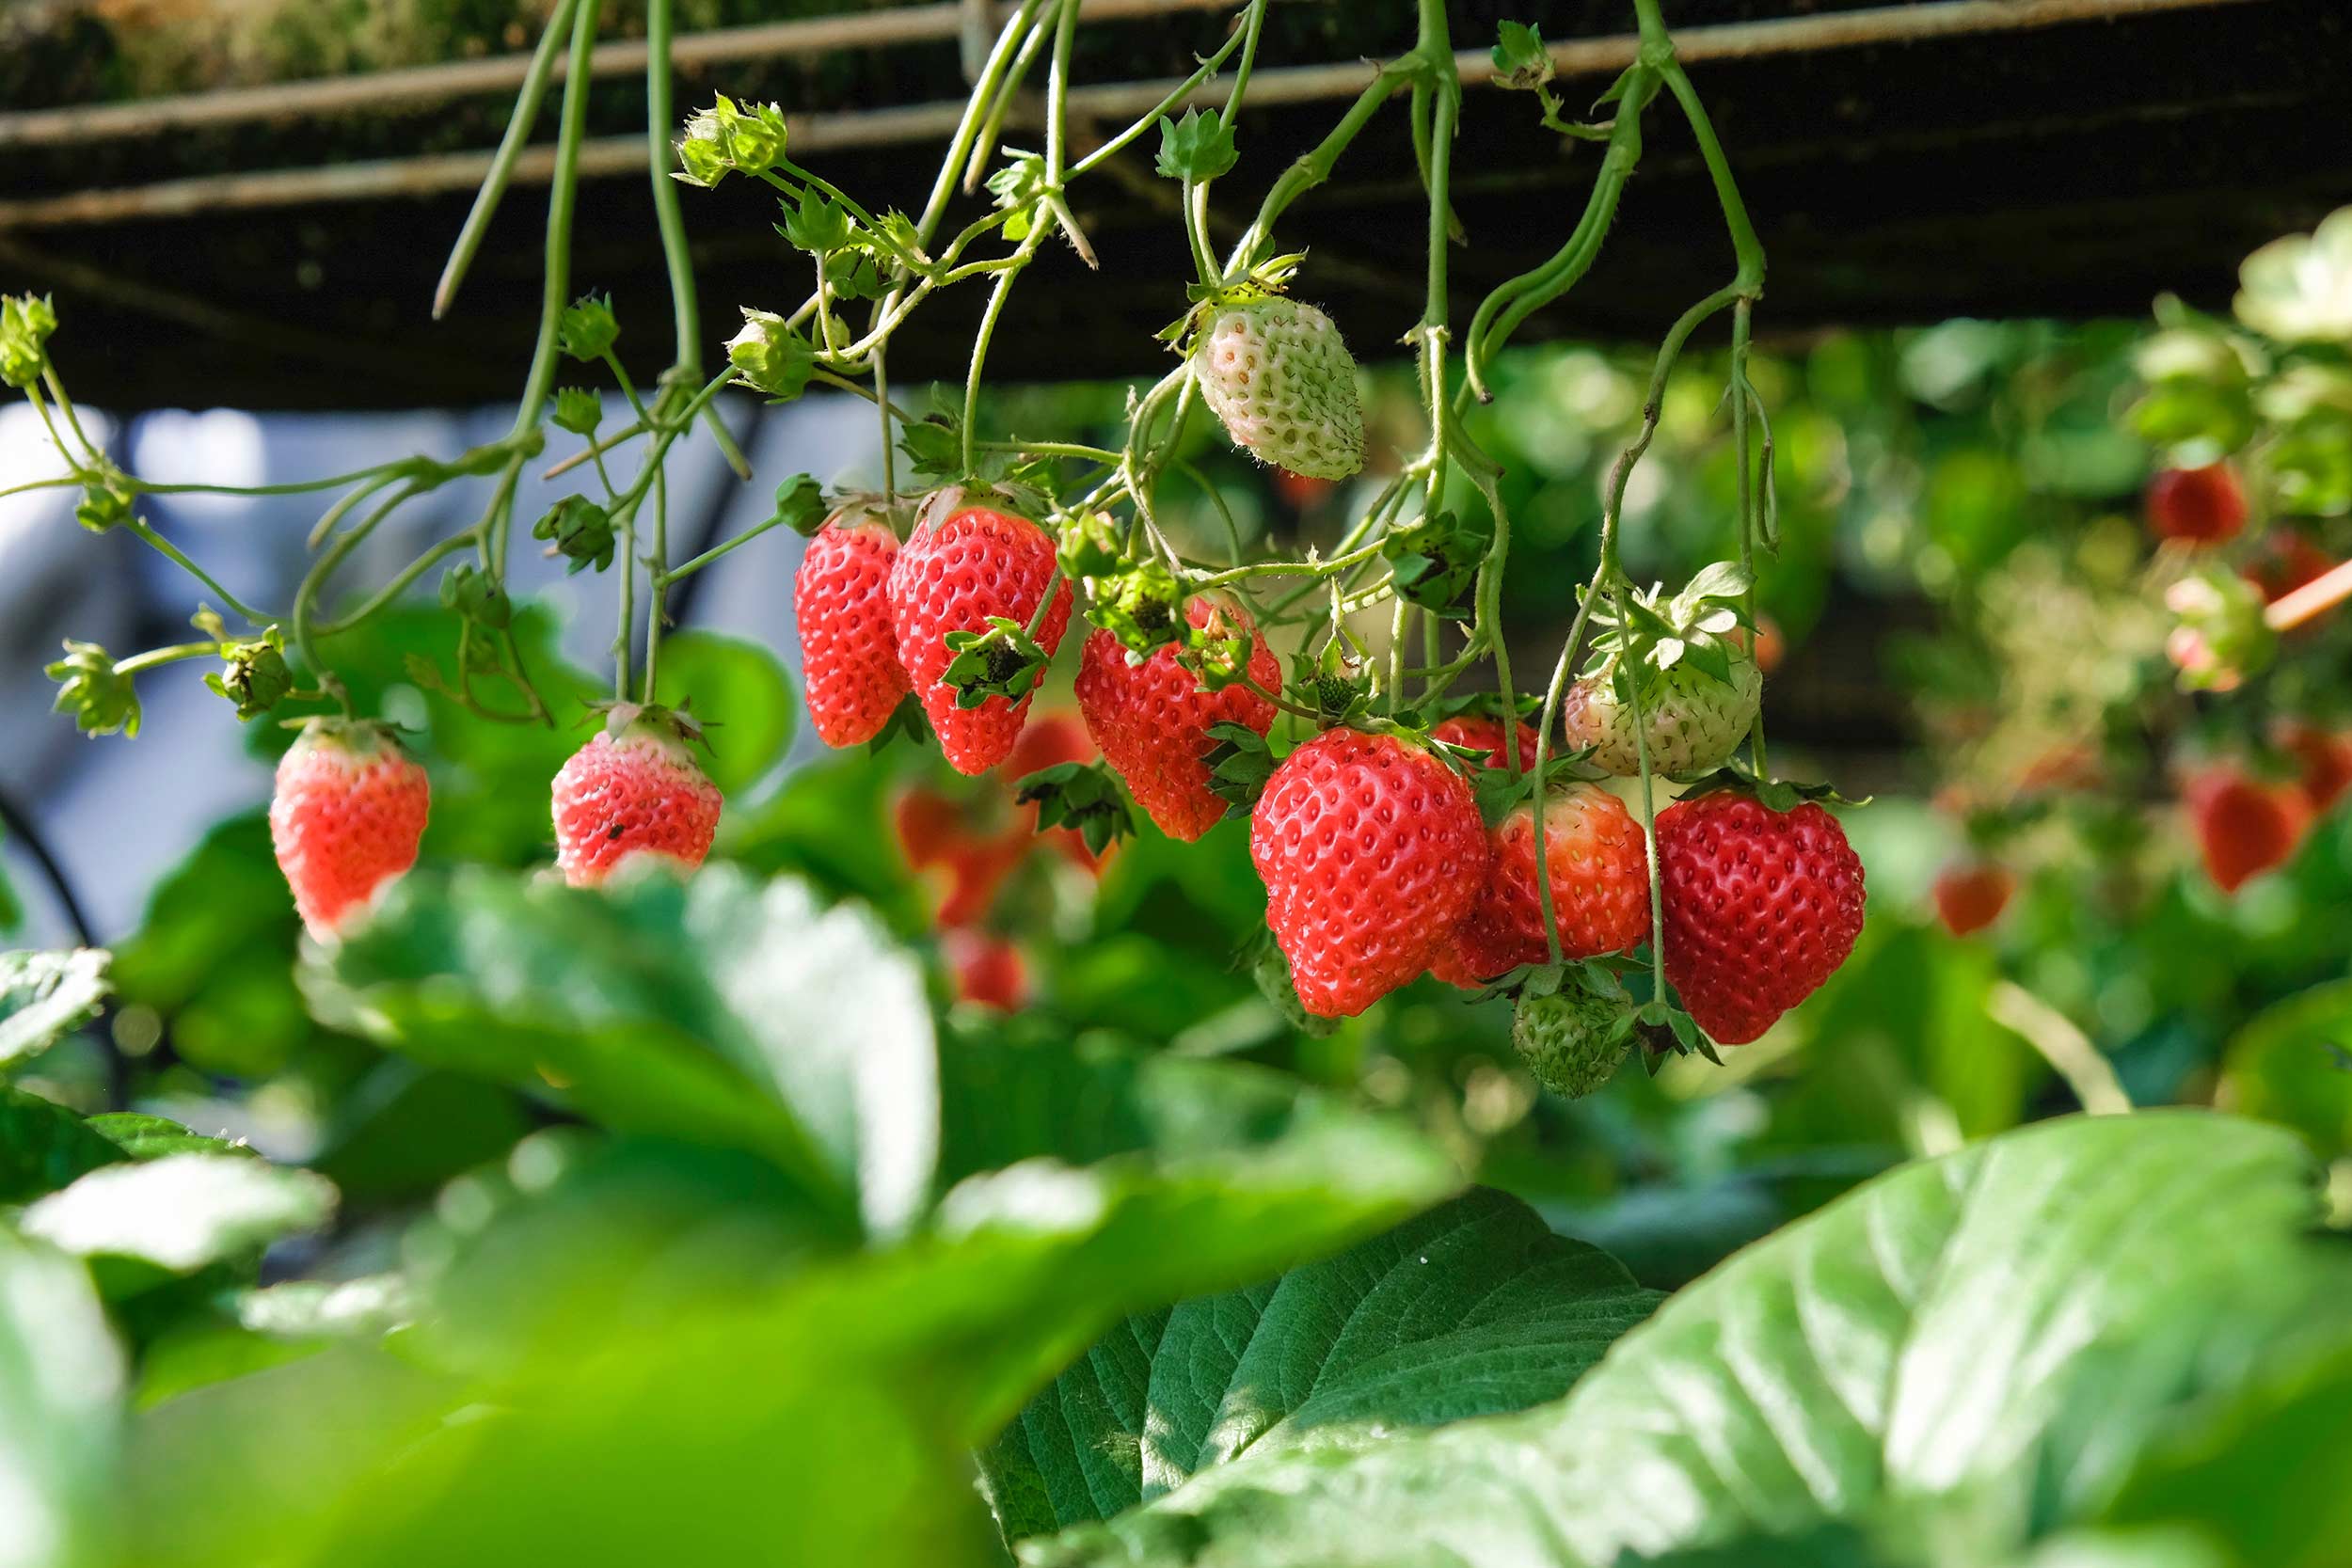 Strawberries on the vine